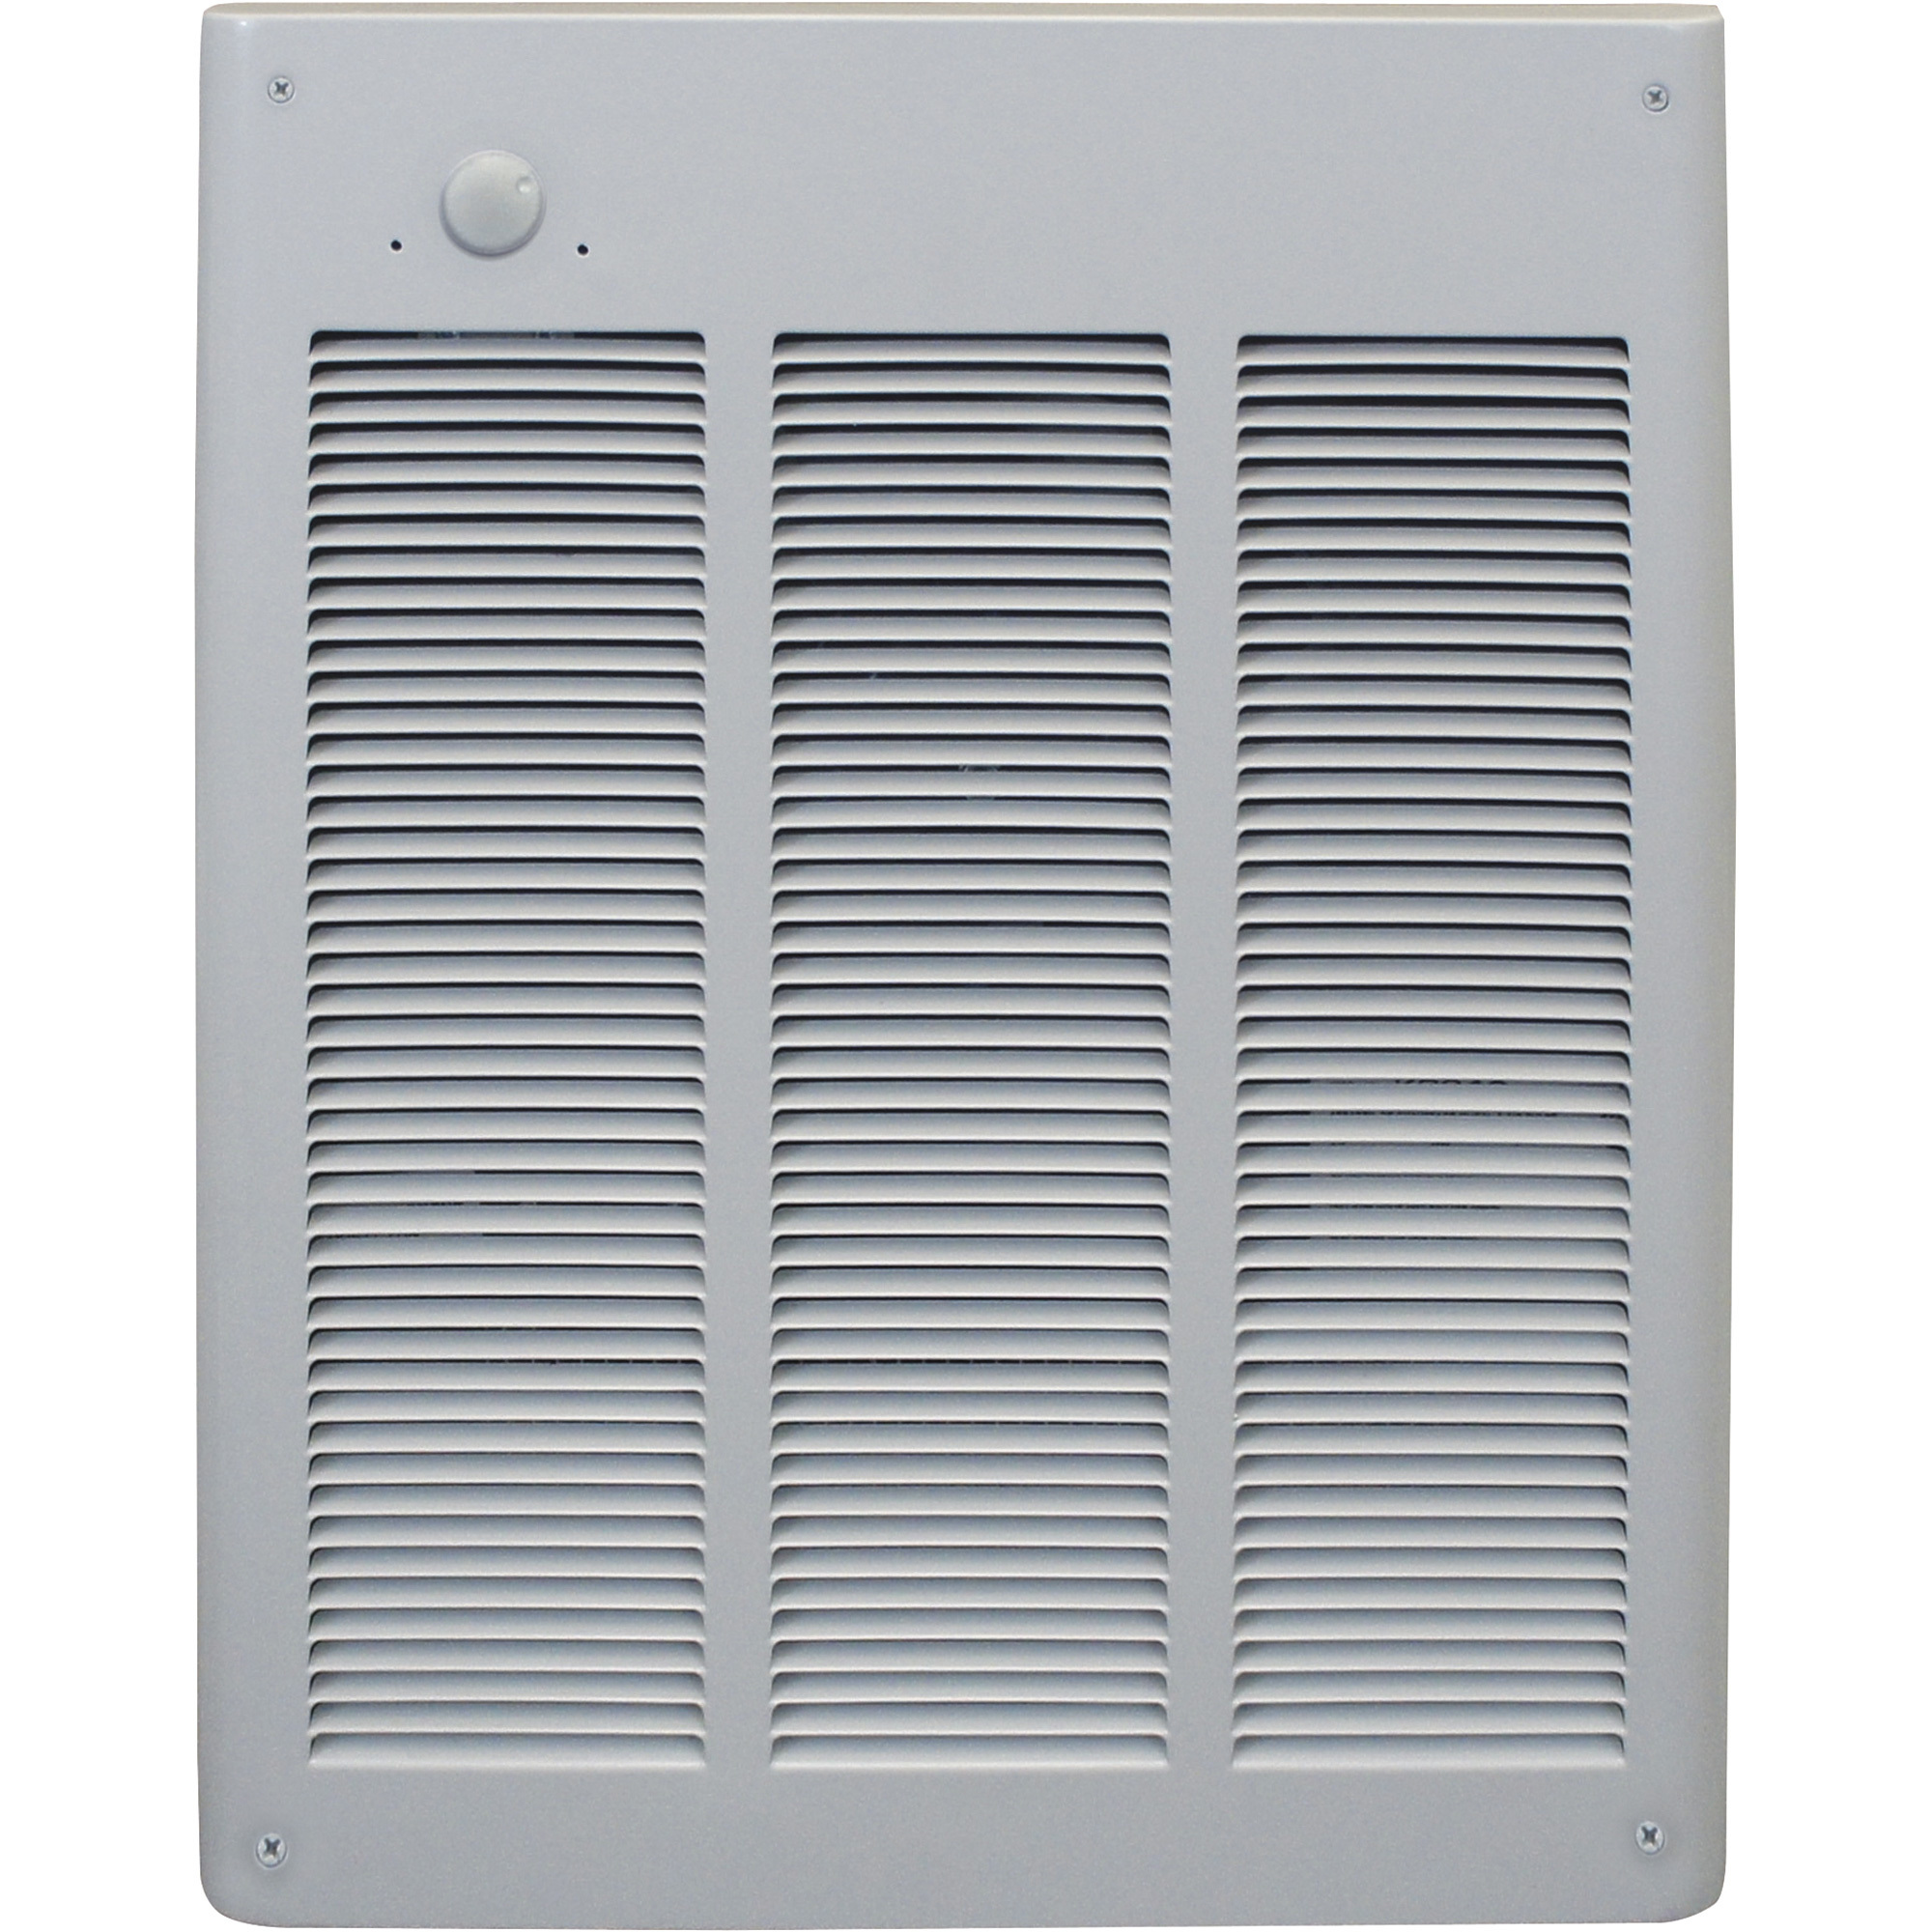 Fahrenheat Commercial Wall Heater â 4,000 Watts, 240 Volts, Model FZL4004